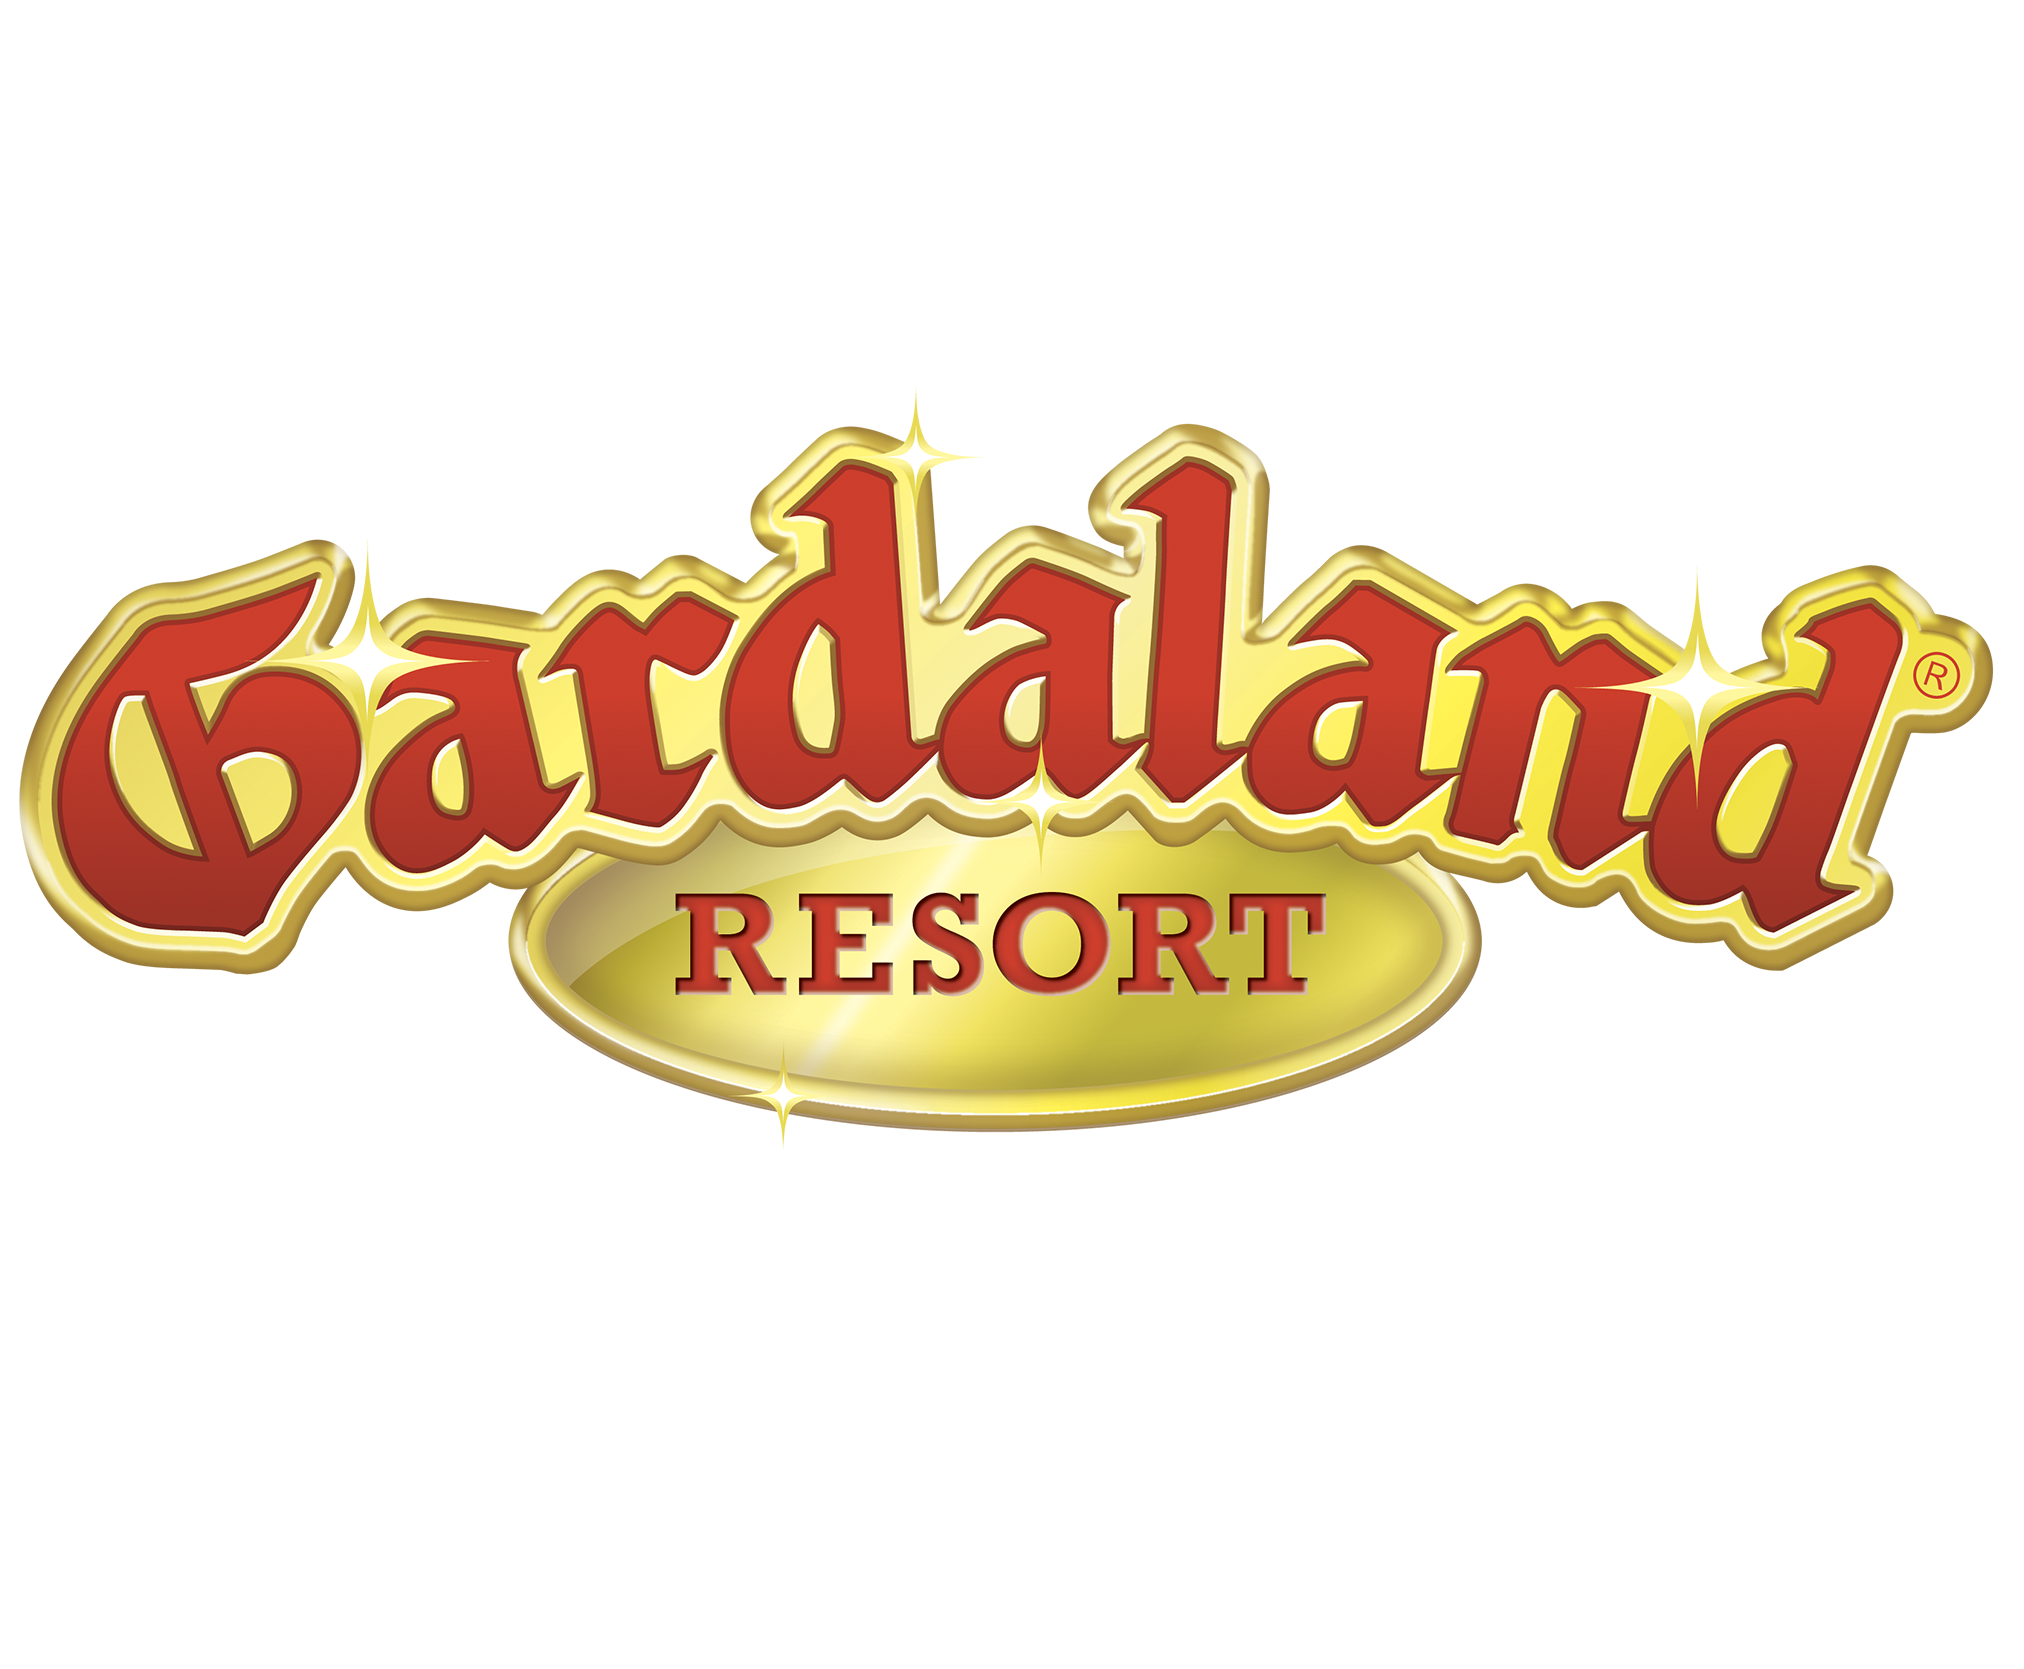 Ingresso Gardaland Park Da 37€ Per Adulto Coupons & Promo Codes